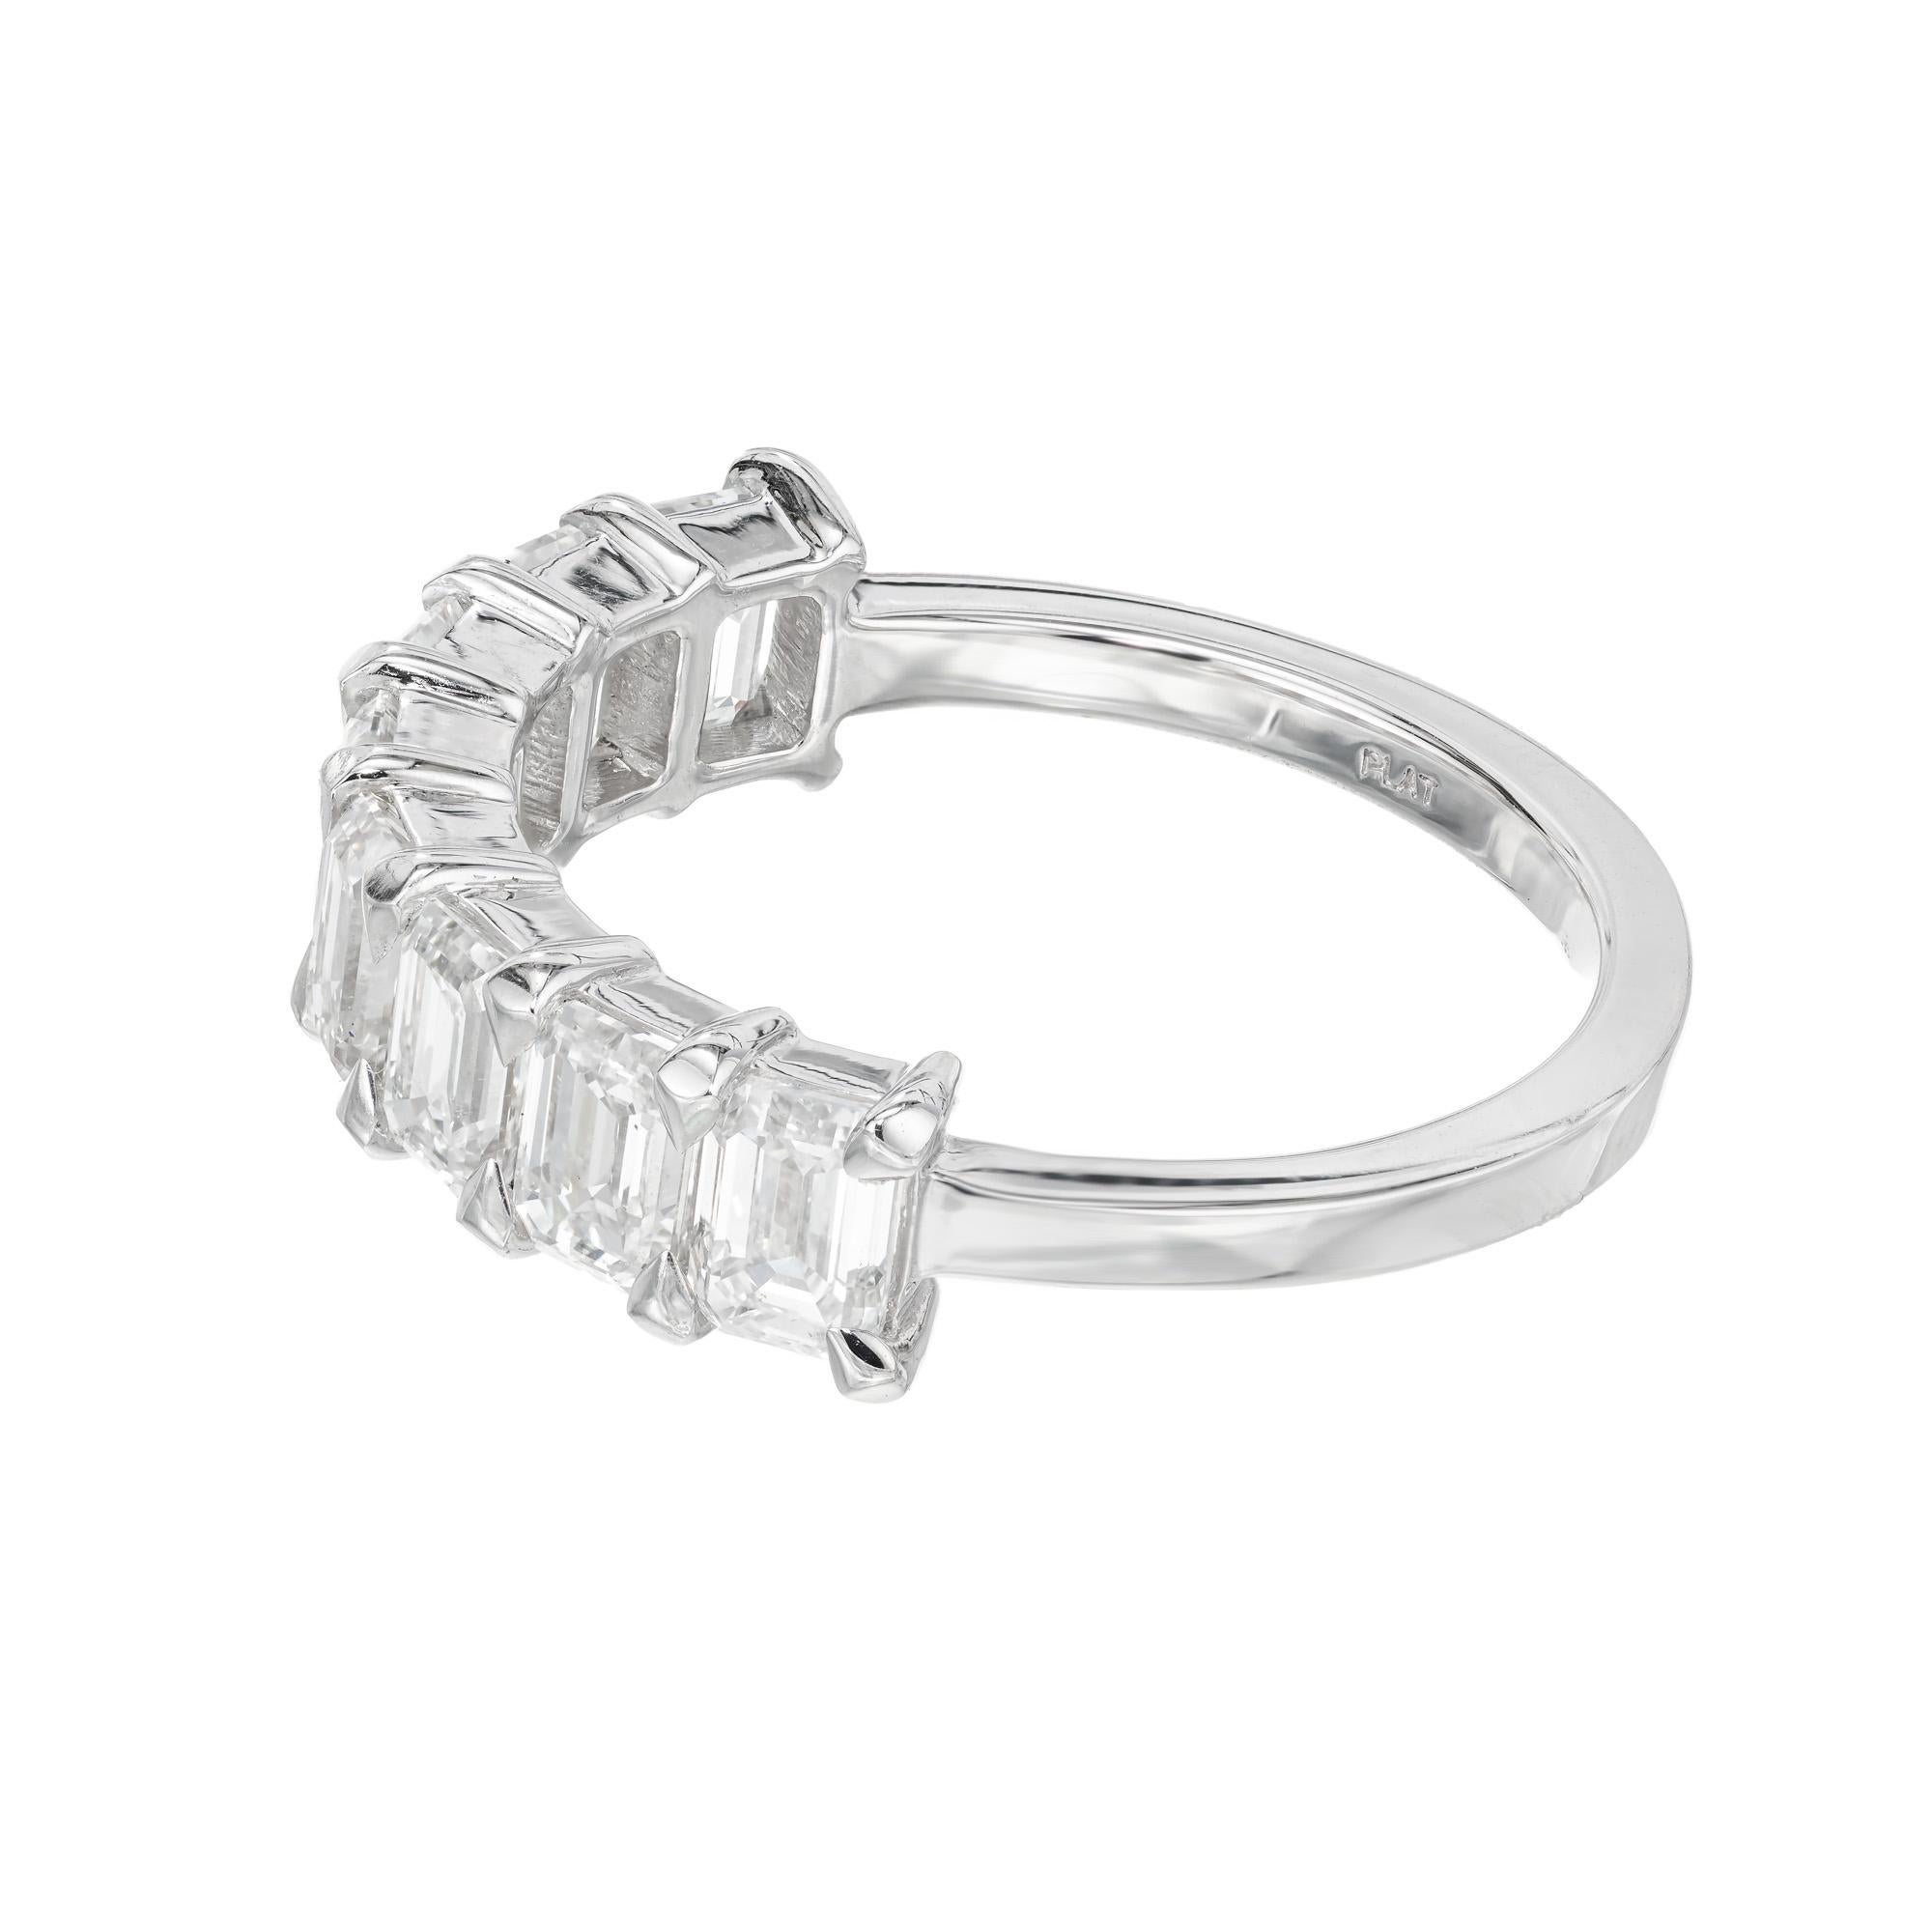 Women's Peter Suchy 2.48 Carat Emerald Cut Diamond Platinum Wedding Band Ring For Sale